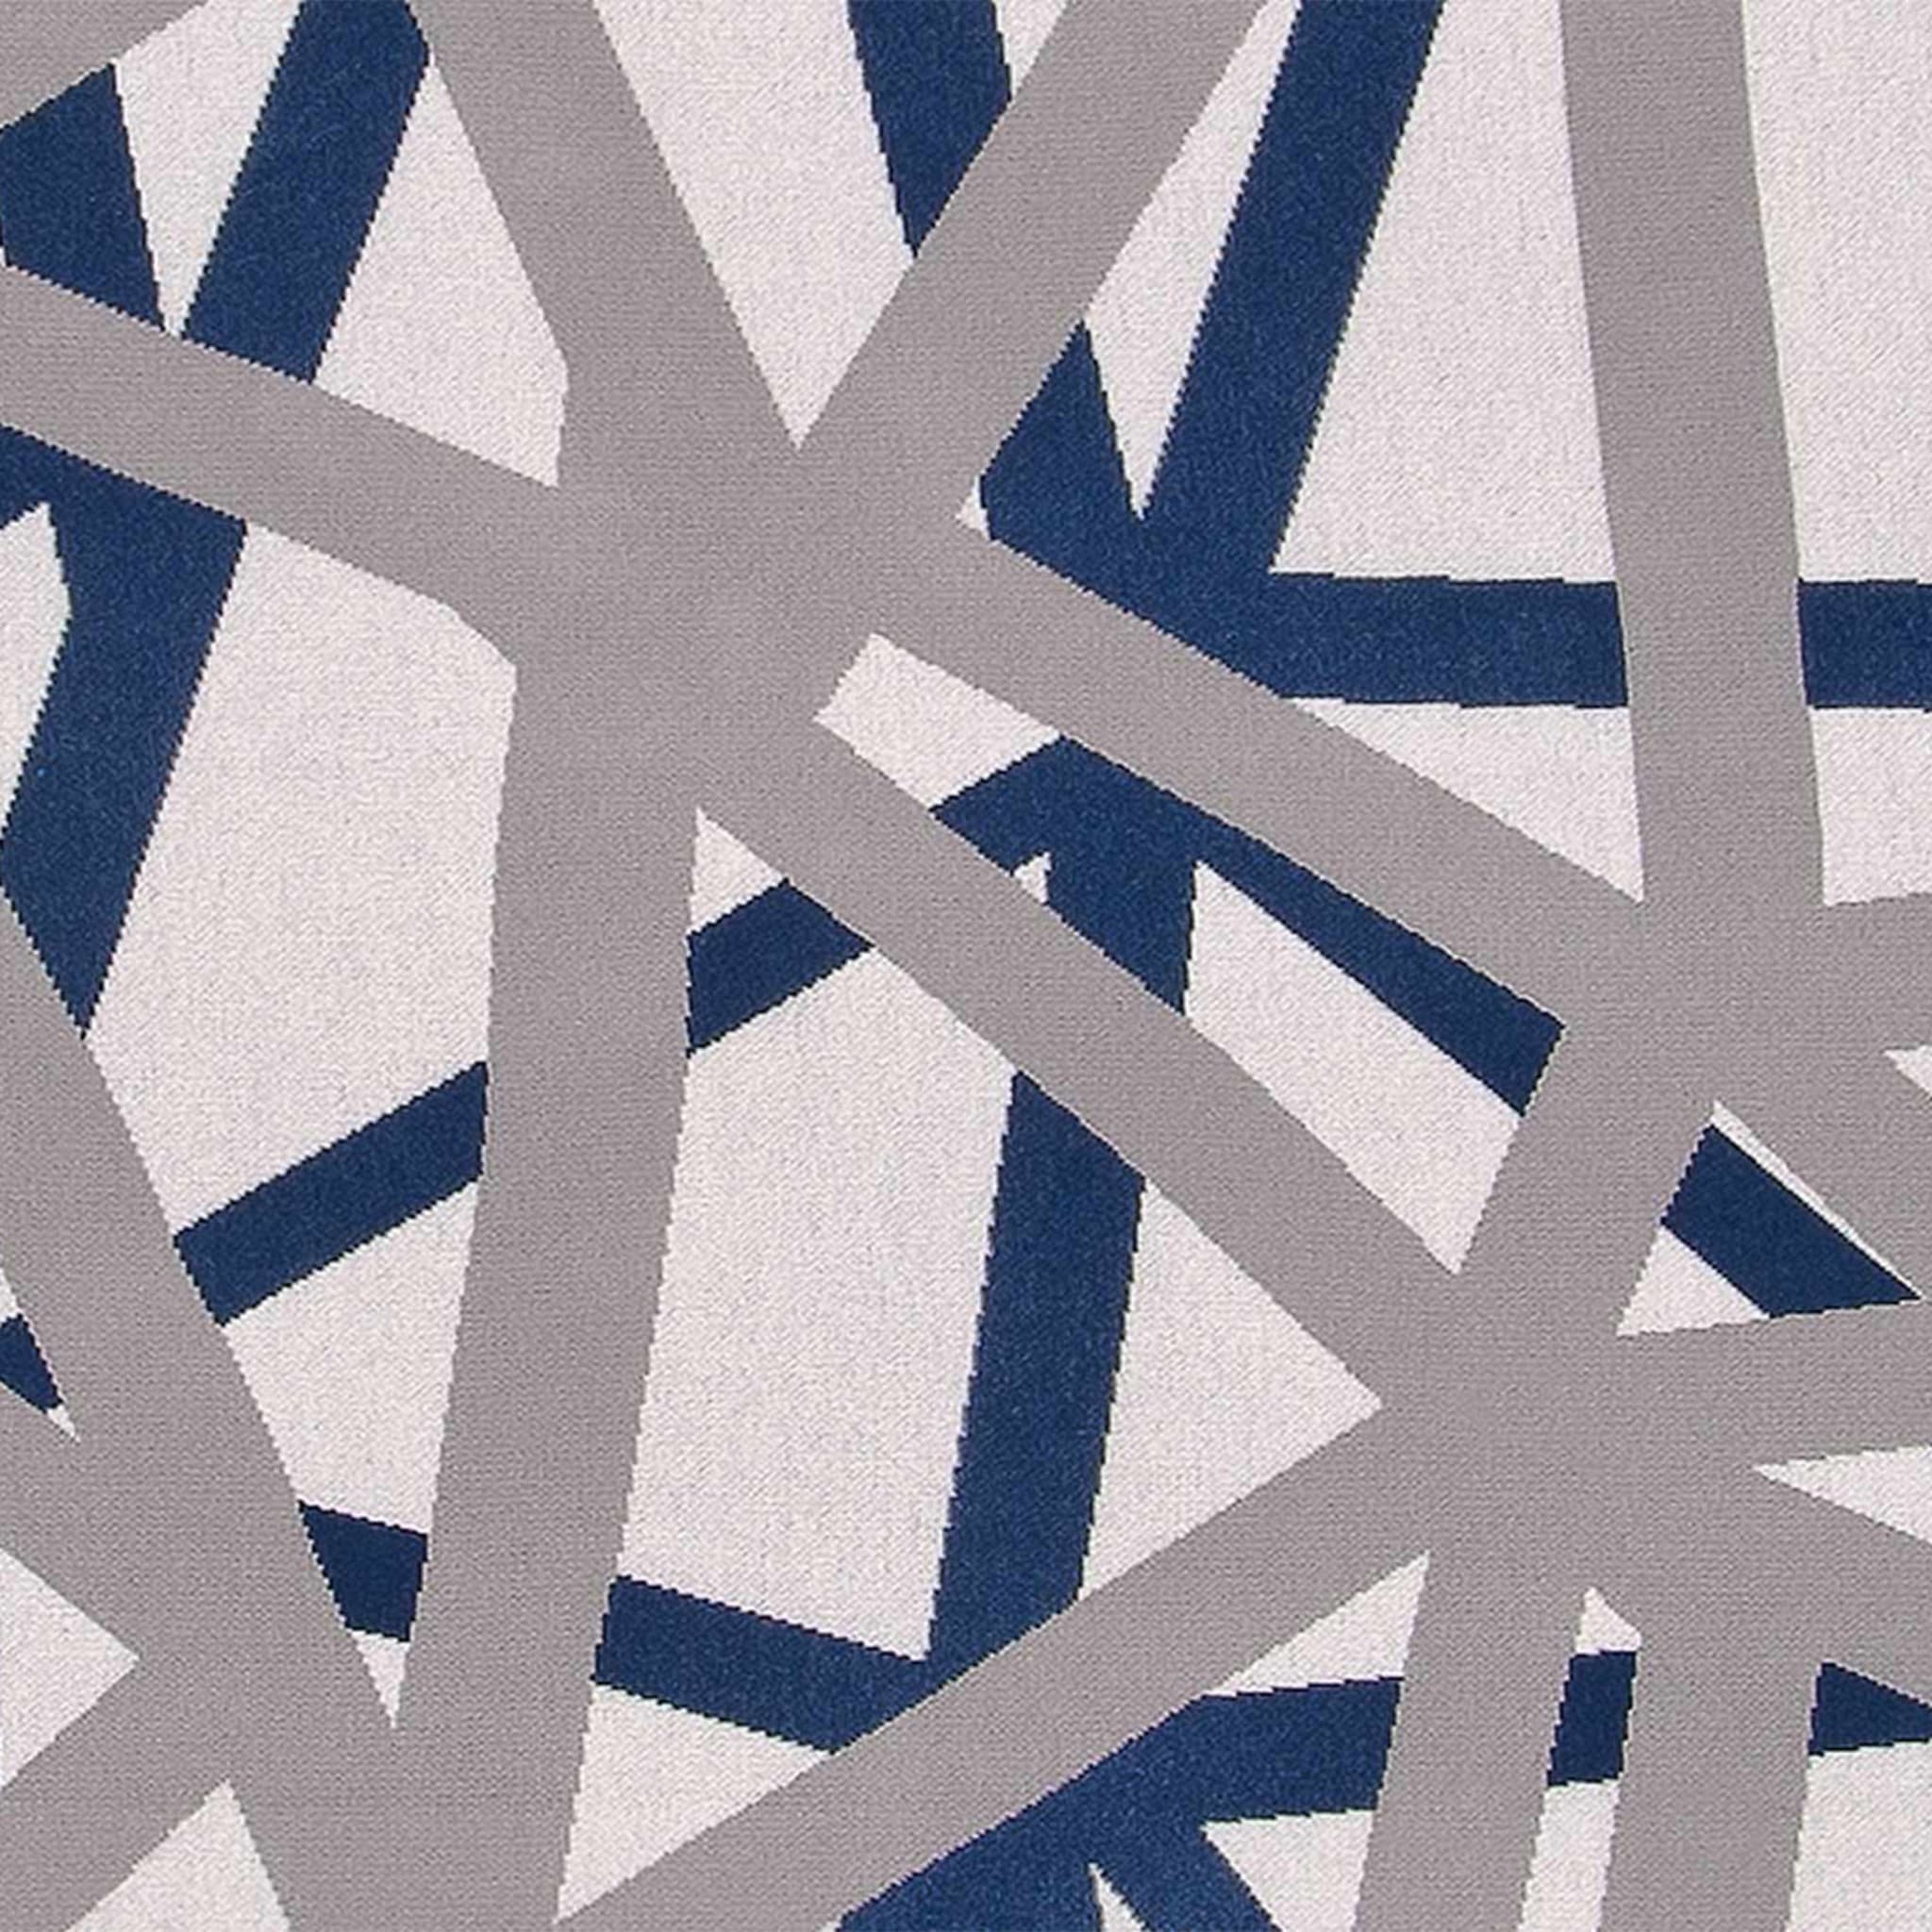 Cobweb White/Gray/Blue Blanket - Alternative view 1